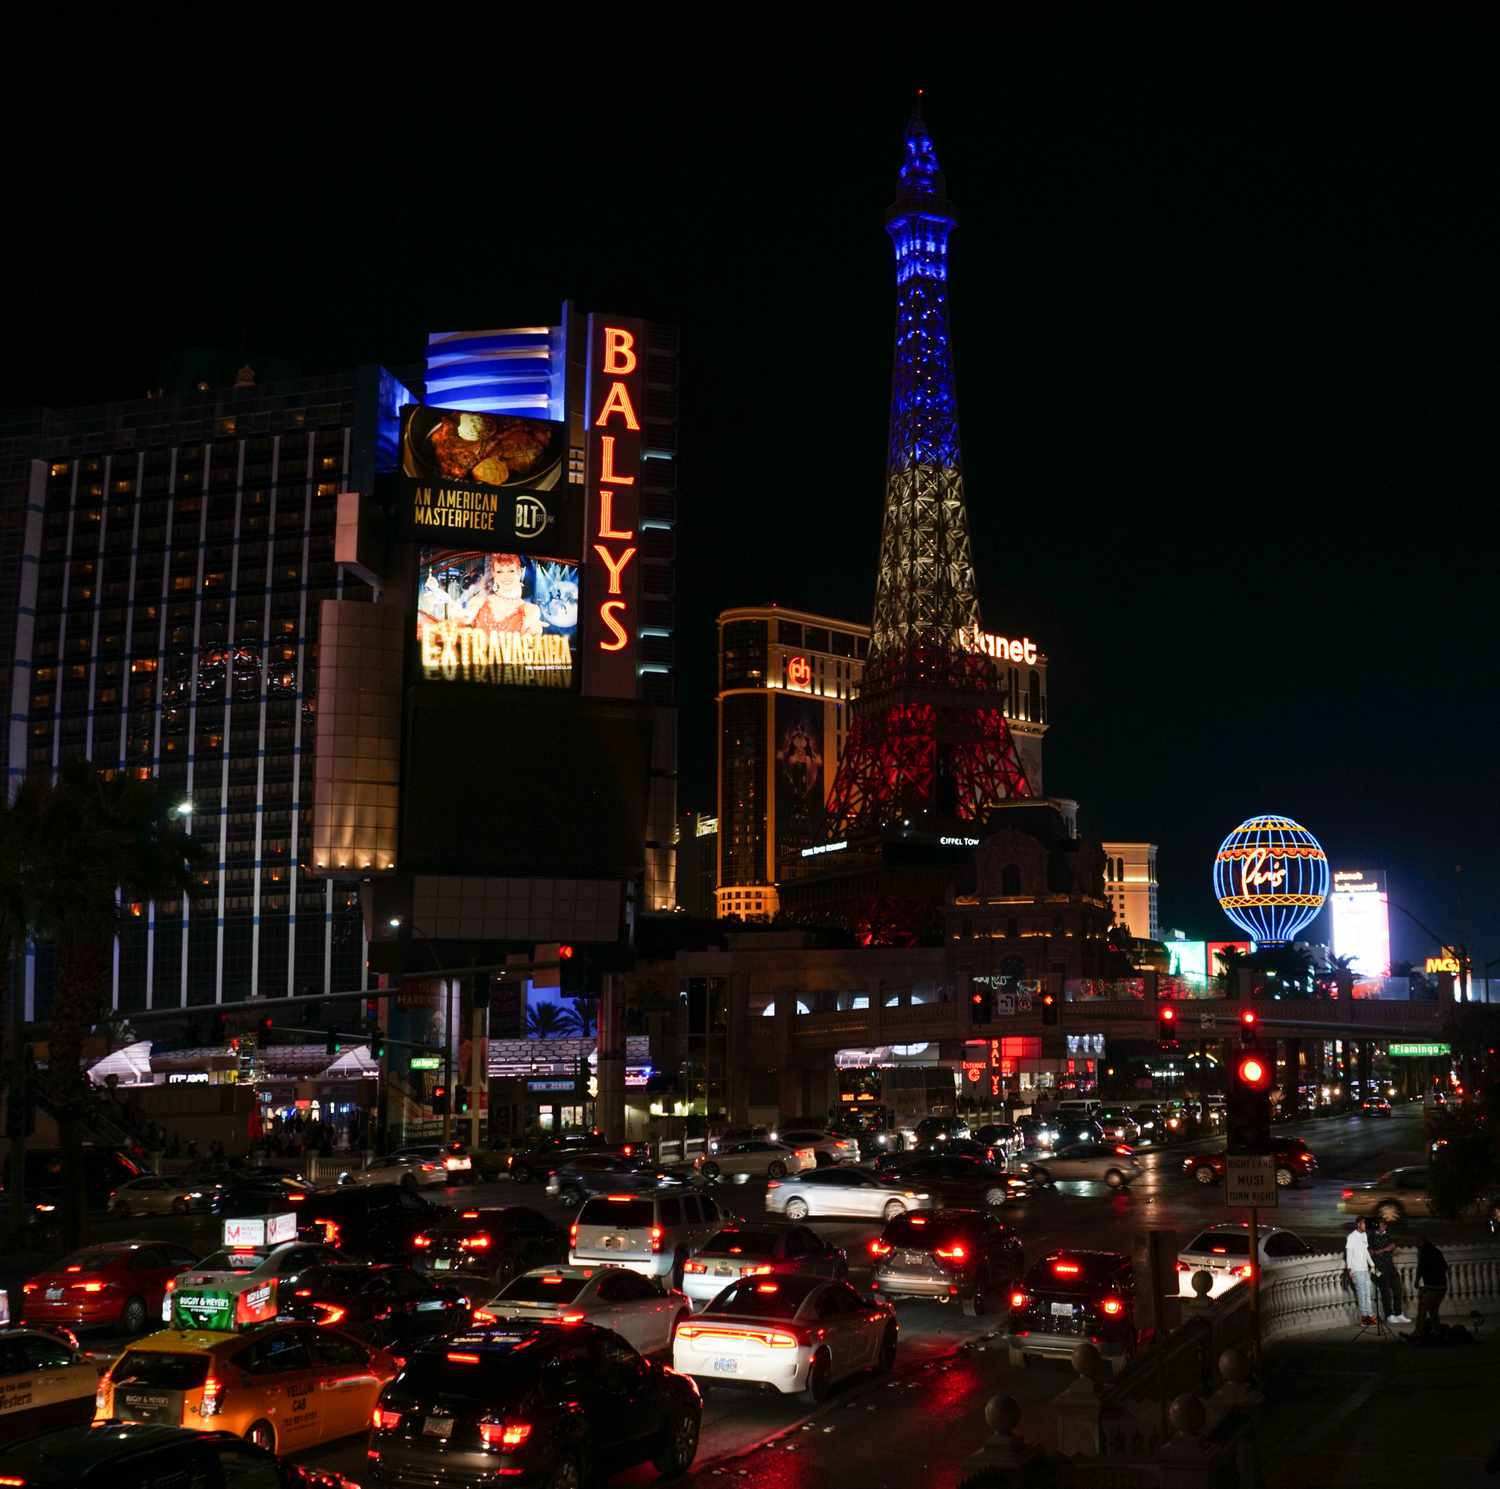 Horseshoe tower to become part of Paris Las Vegas